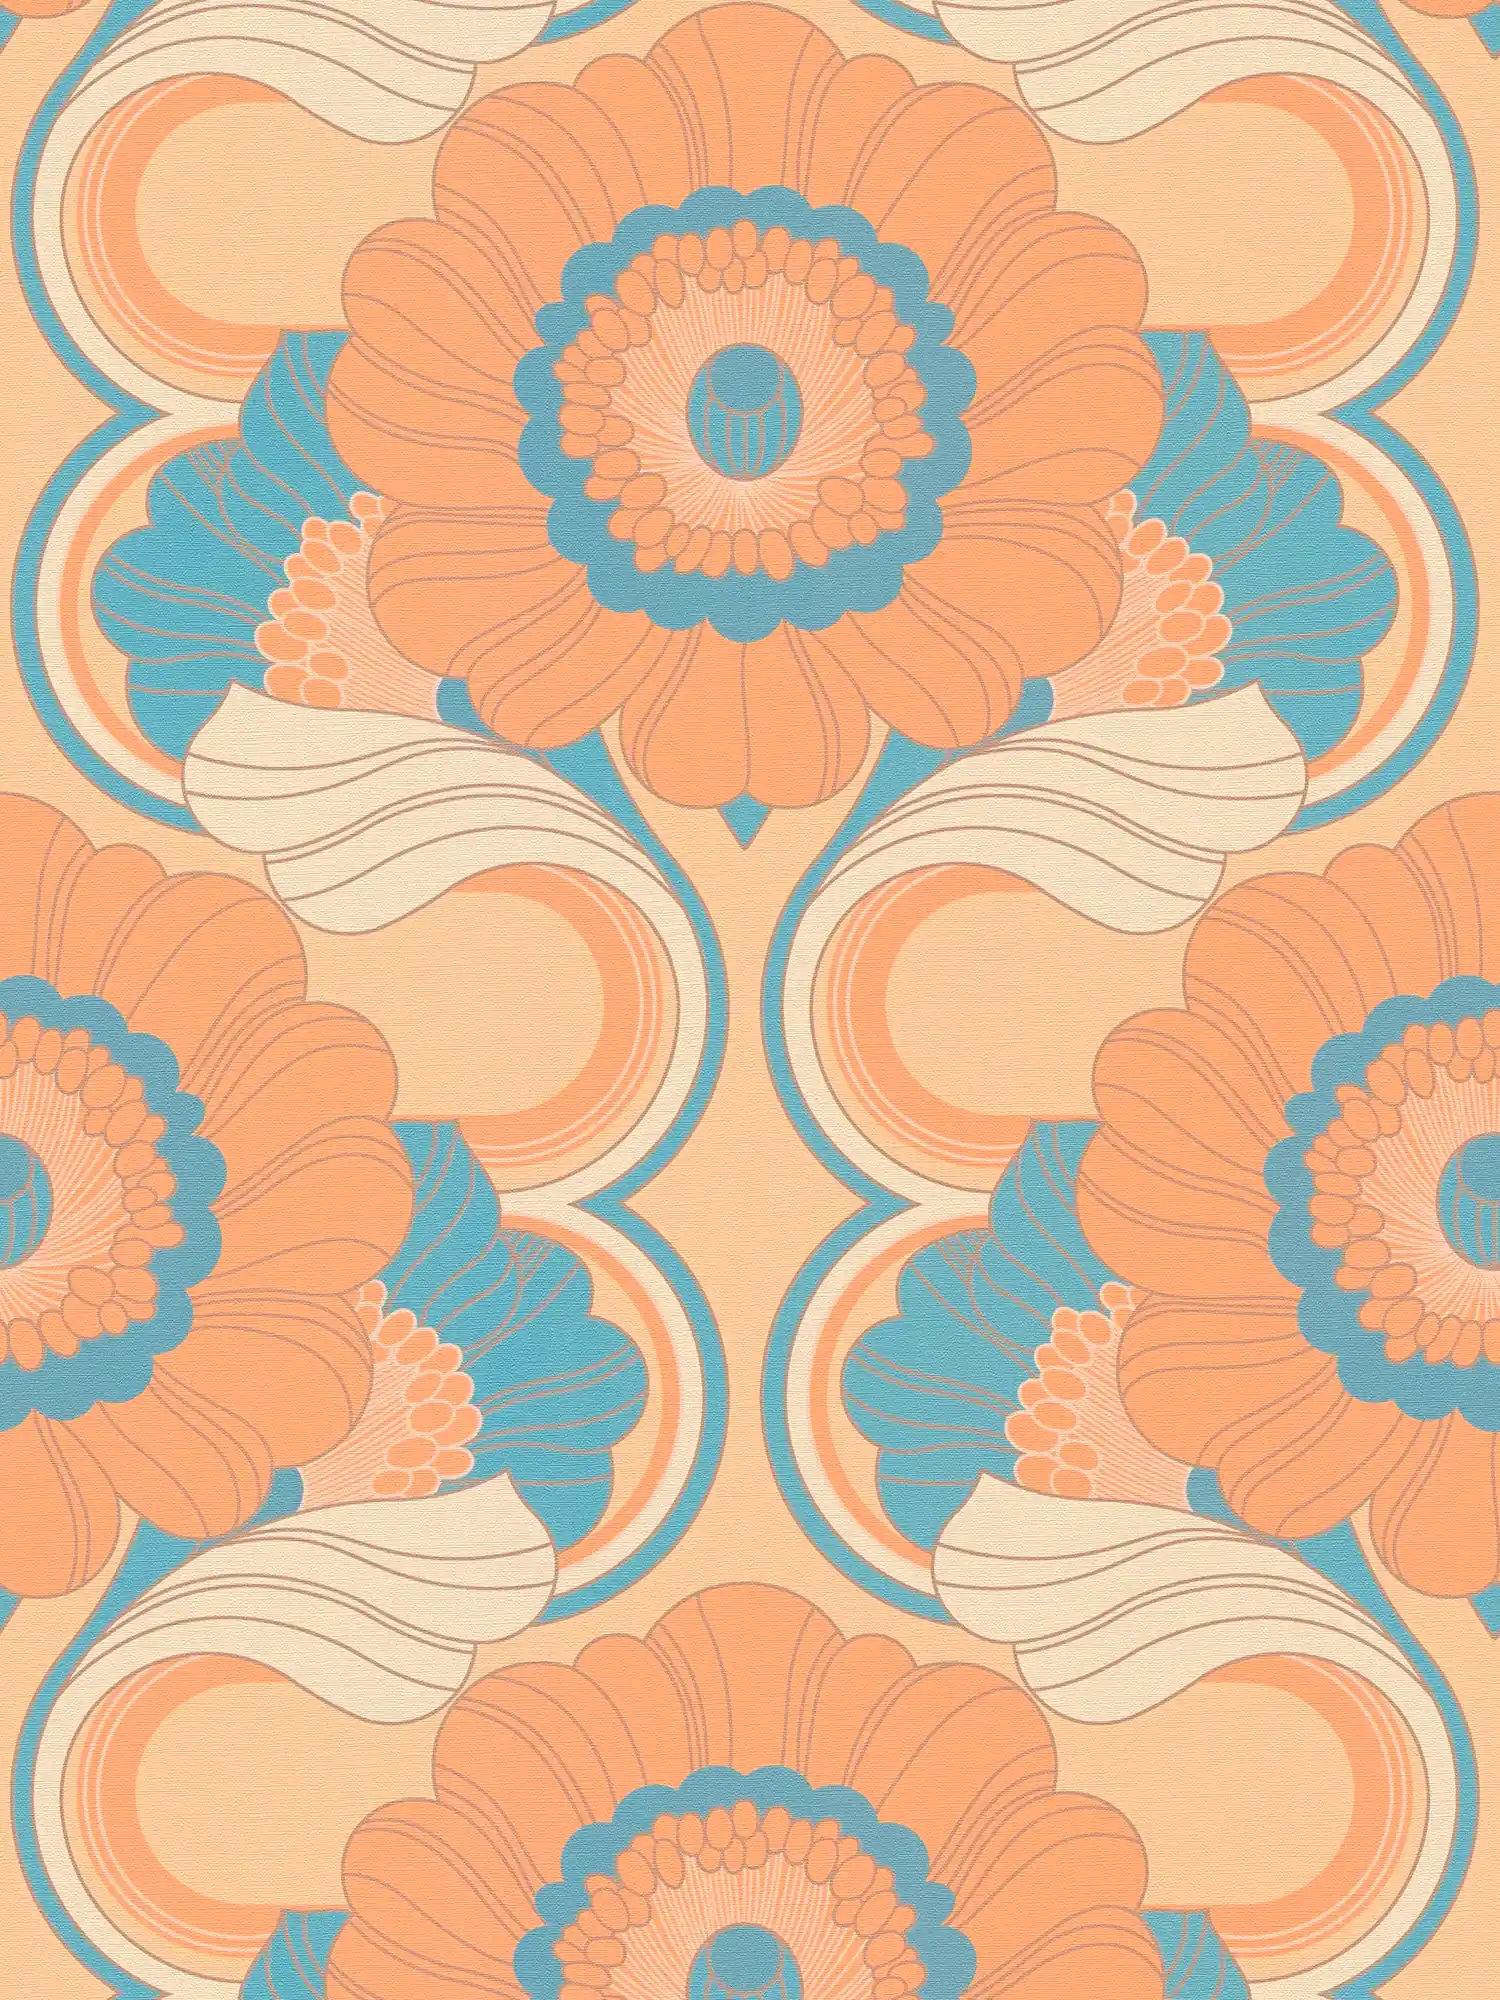 Floral non-woven wallpaper in retro style - beige, turquoise, orange
